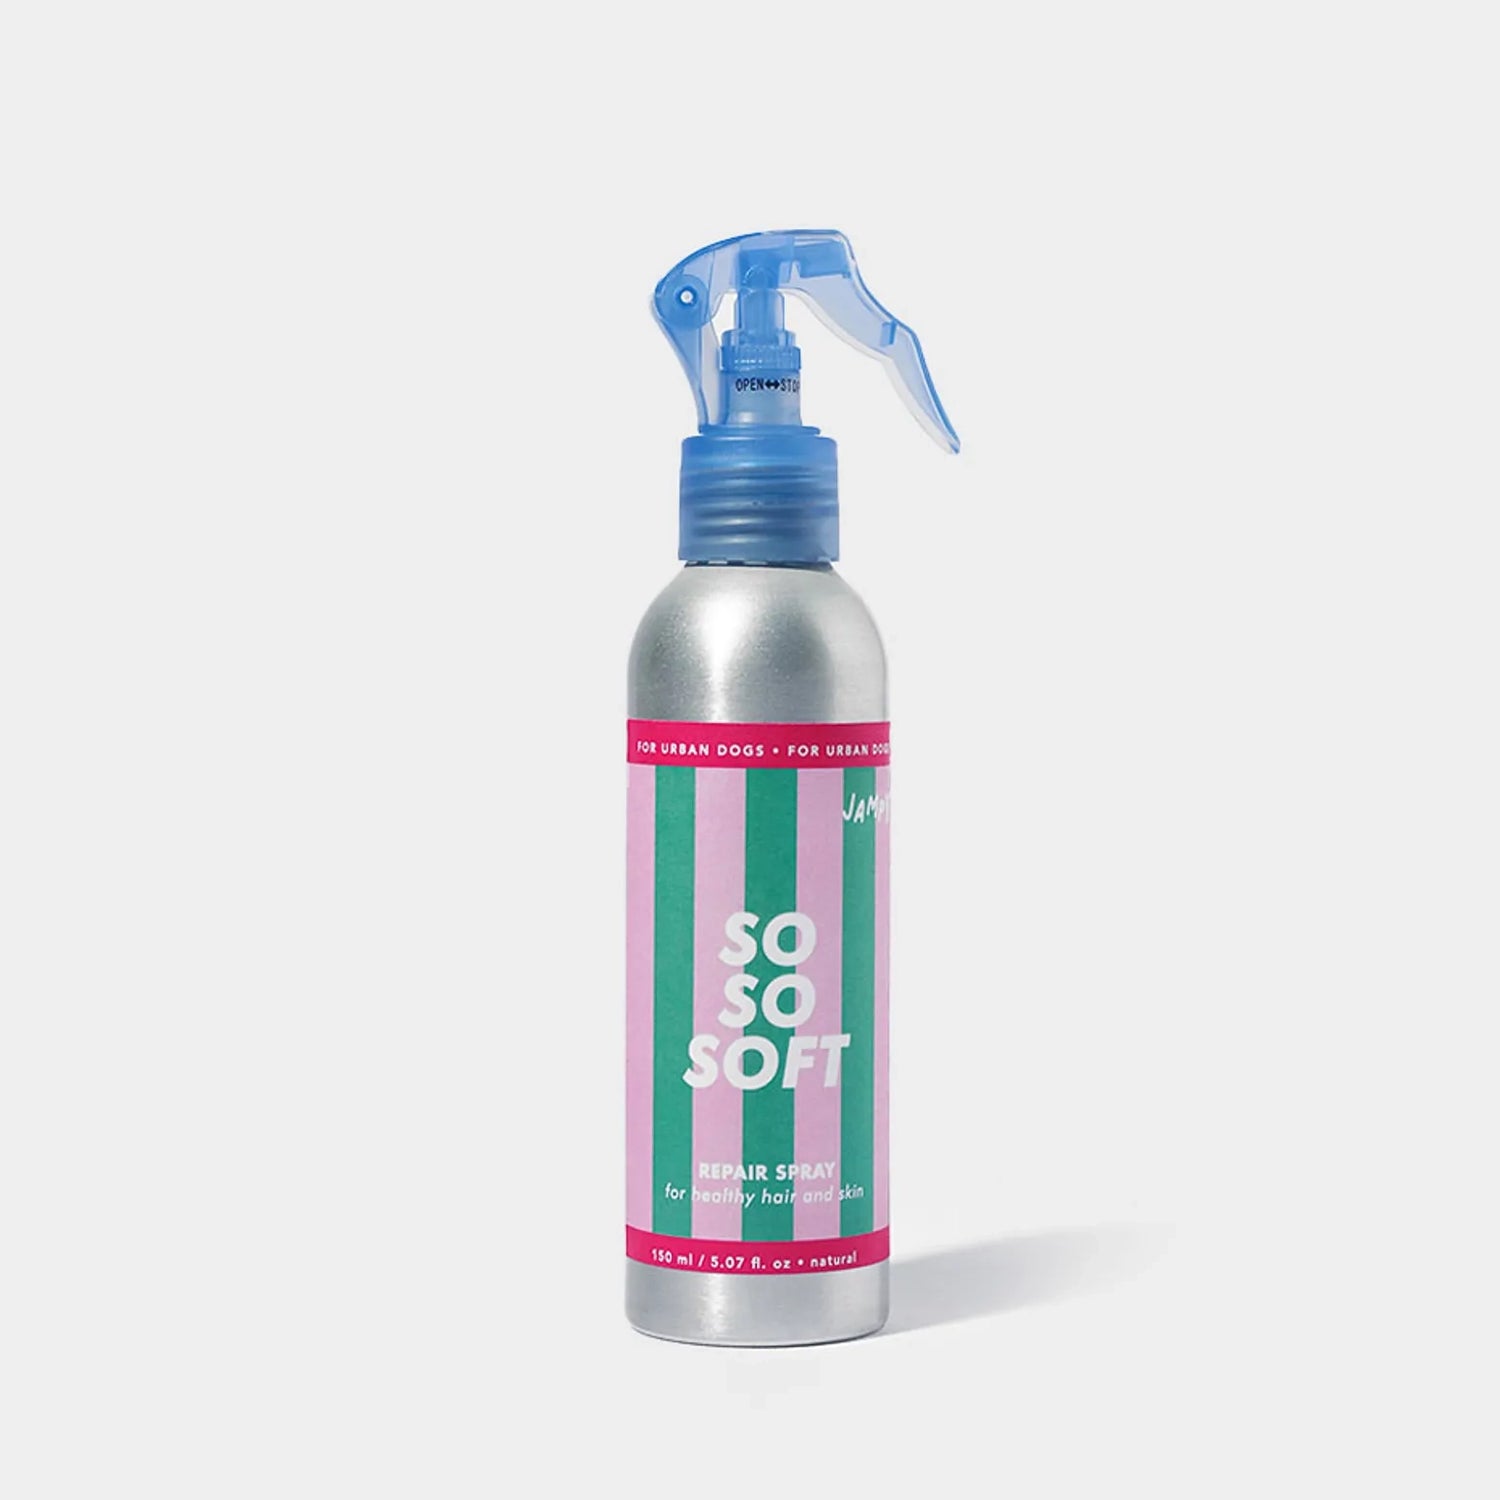 So so soft | Keratin Detangling Spray